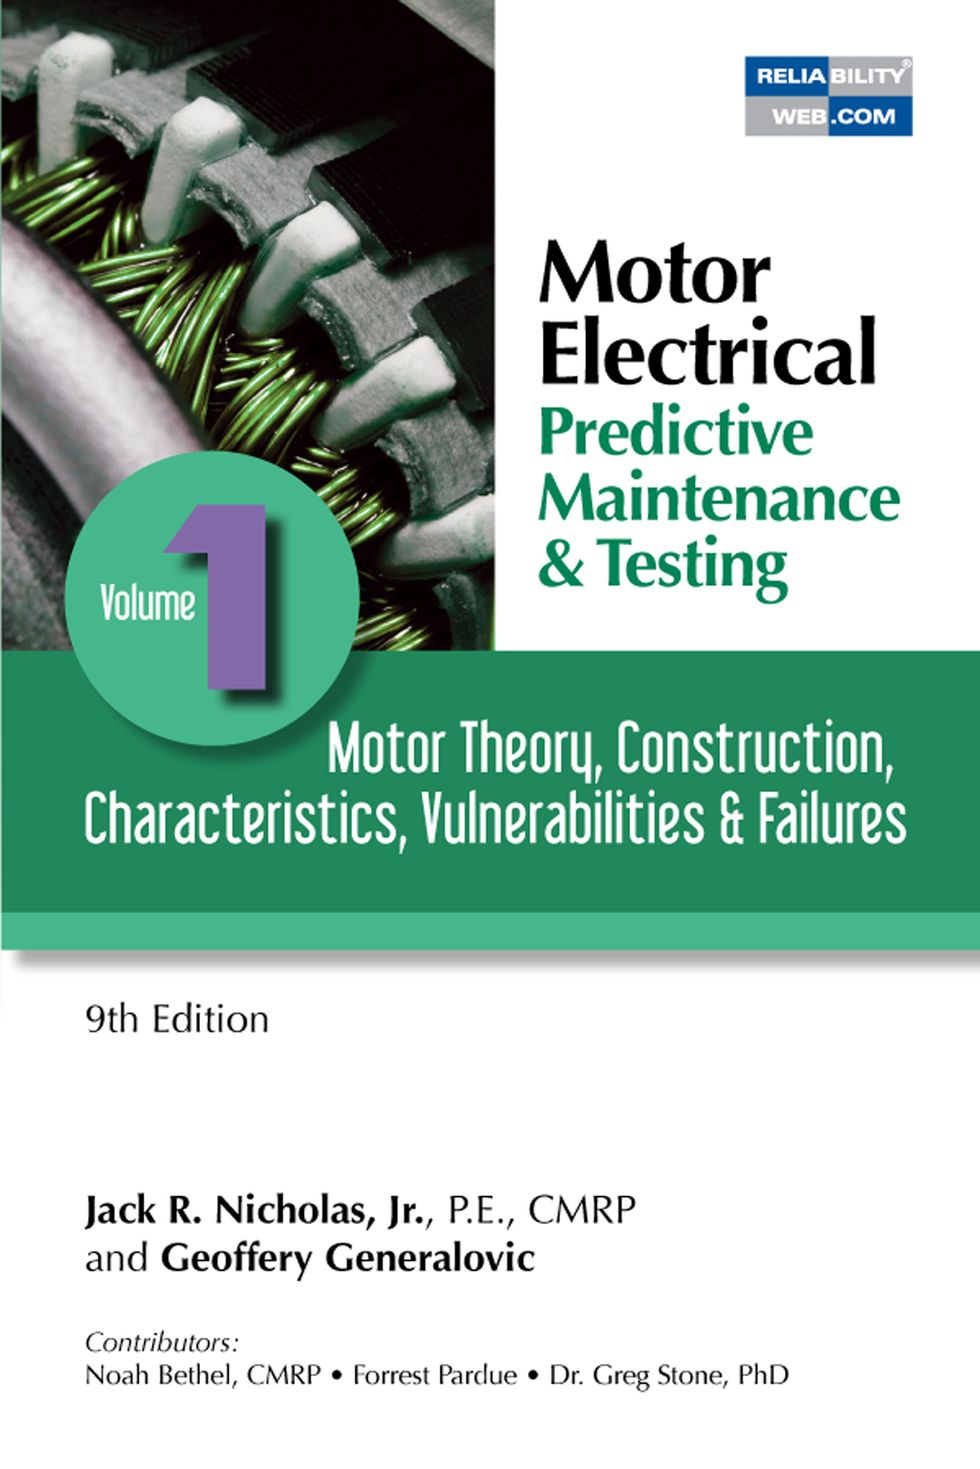  Motor Electrical Predictive Maintenance & Testing Vol. 1 